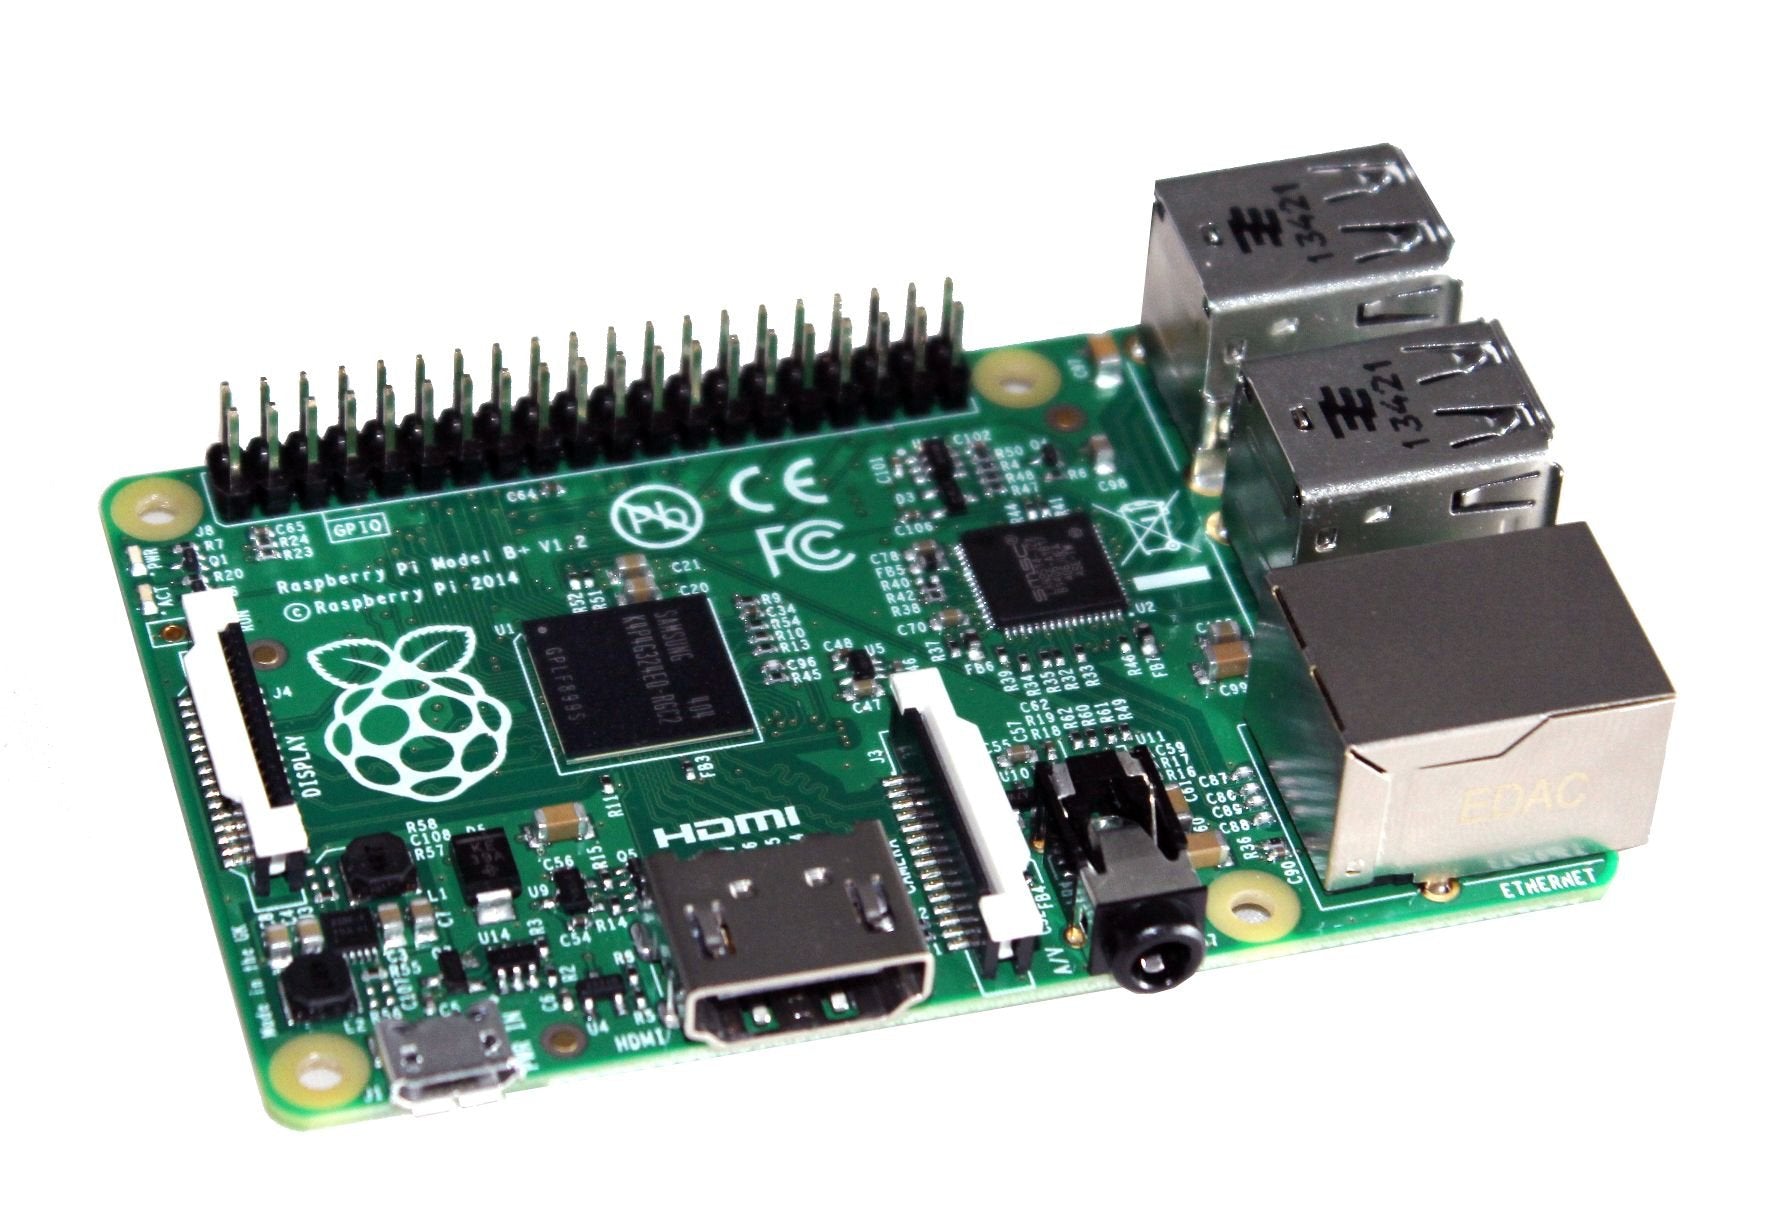 Raspberry Pi 1 Model B+ (B PLUS) 512MB Computer Board